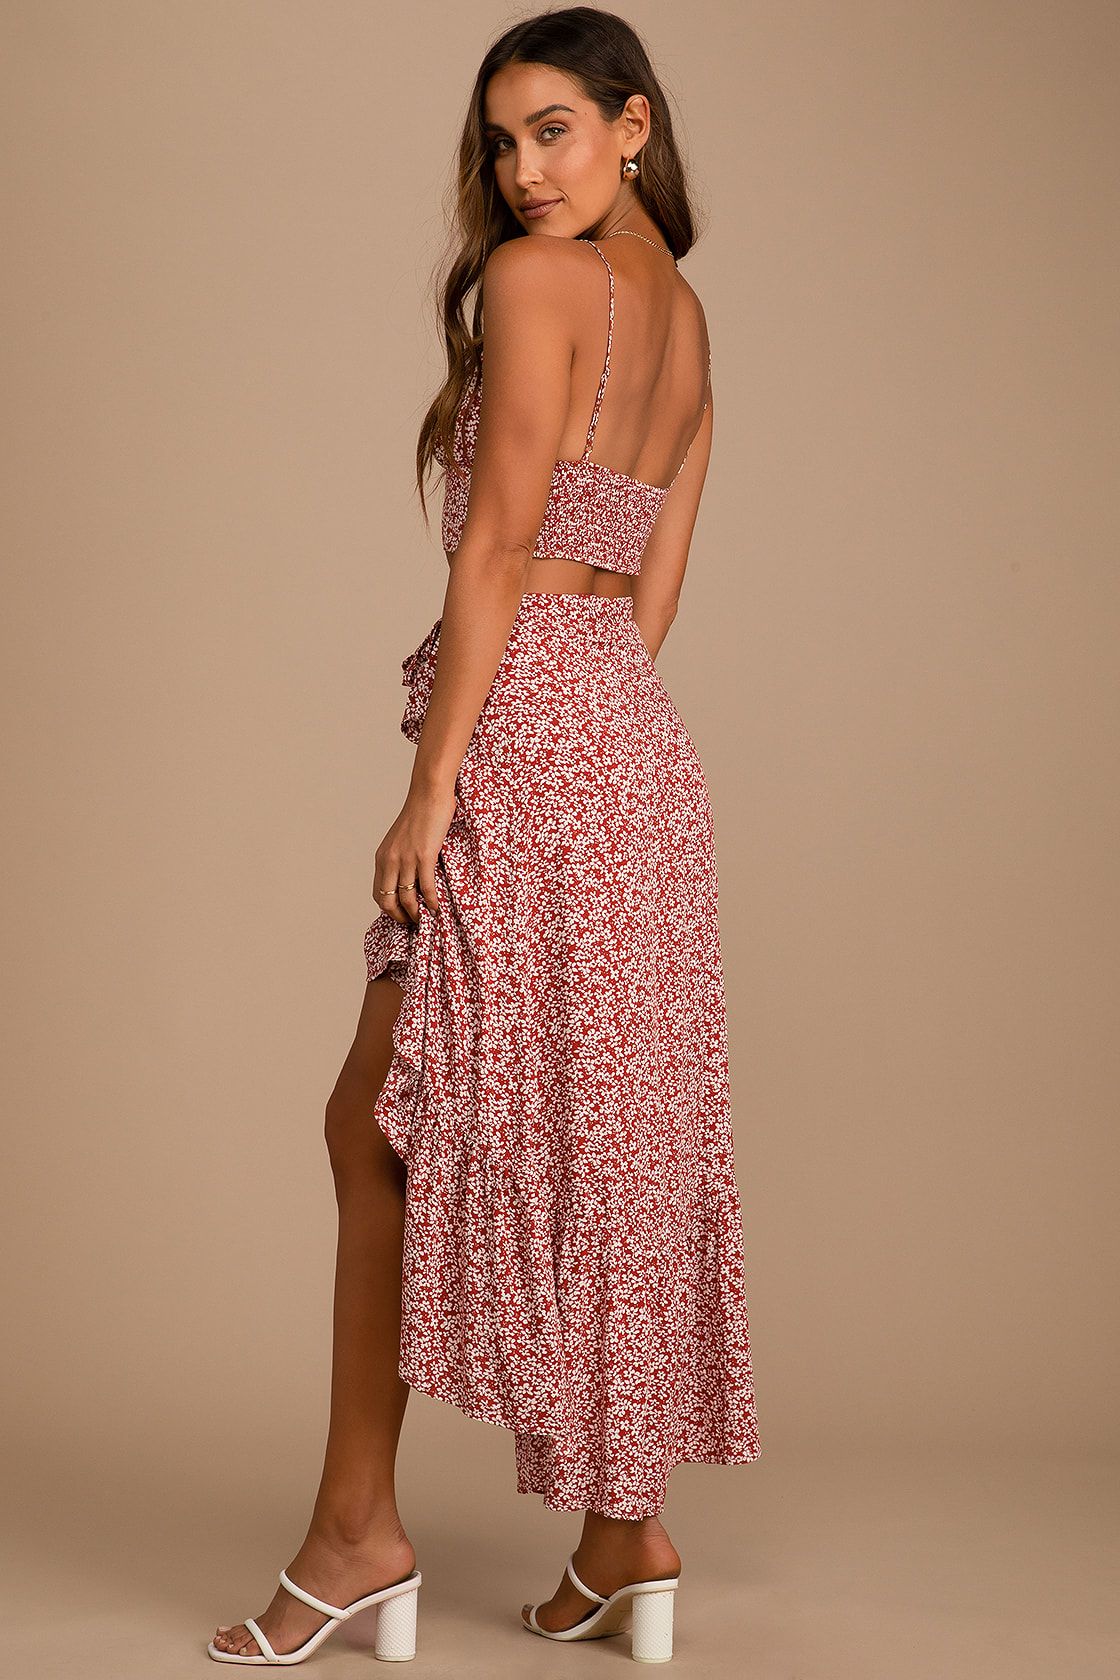 Summer Romance Rust Brown Floral Print Two-Piece Midi Dress | Lulus (US)